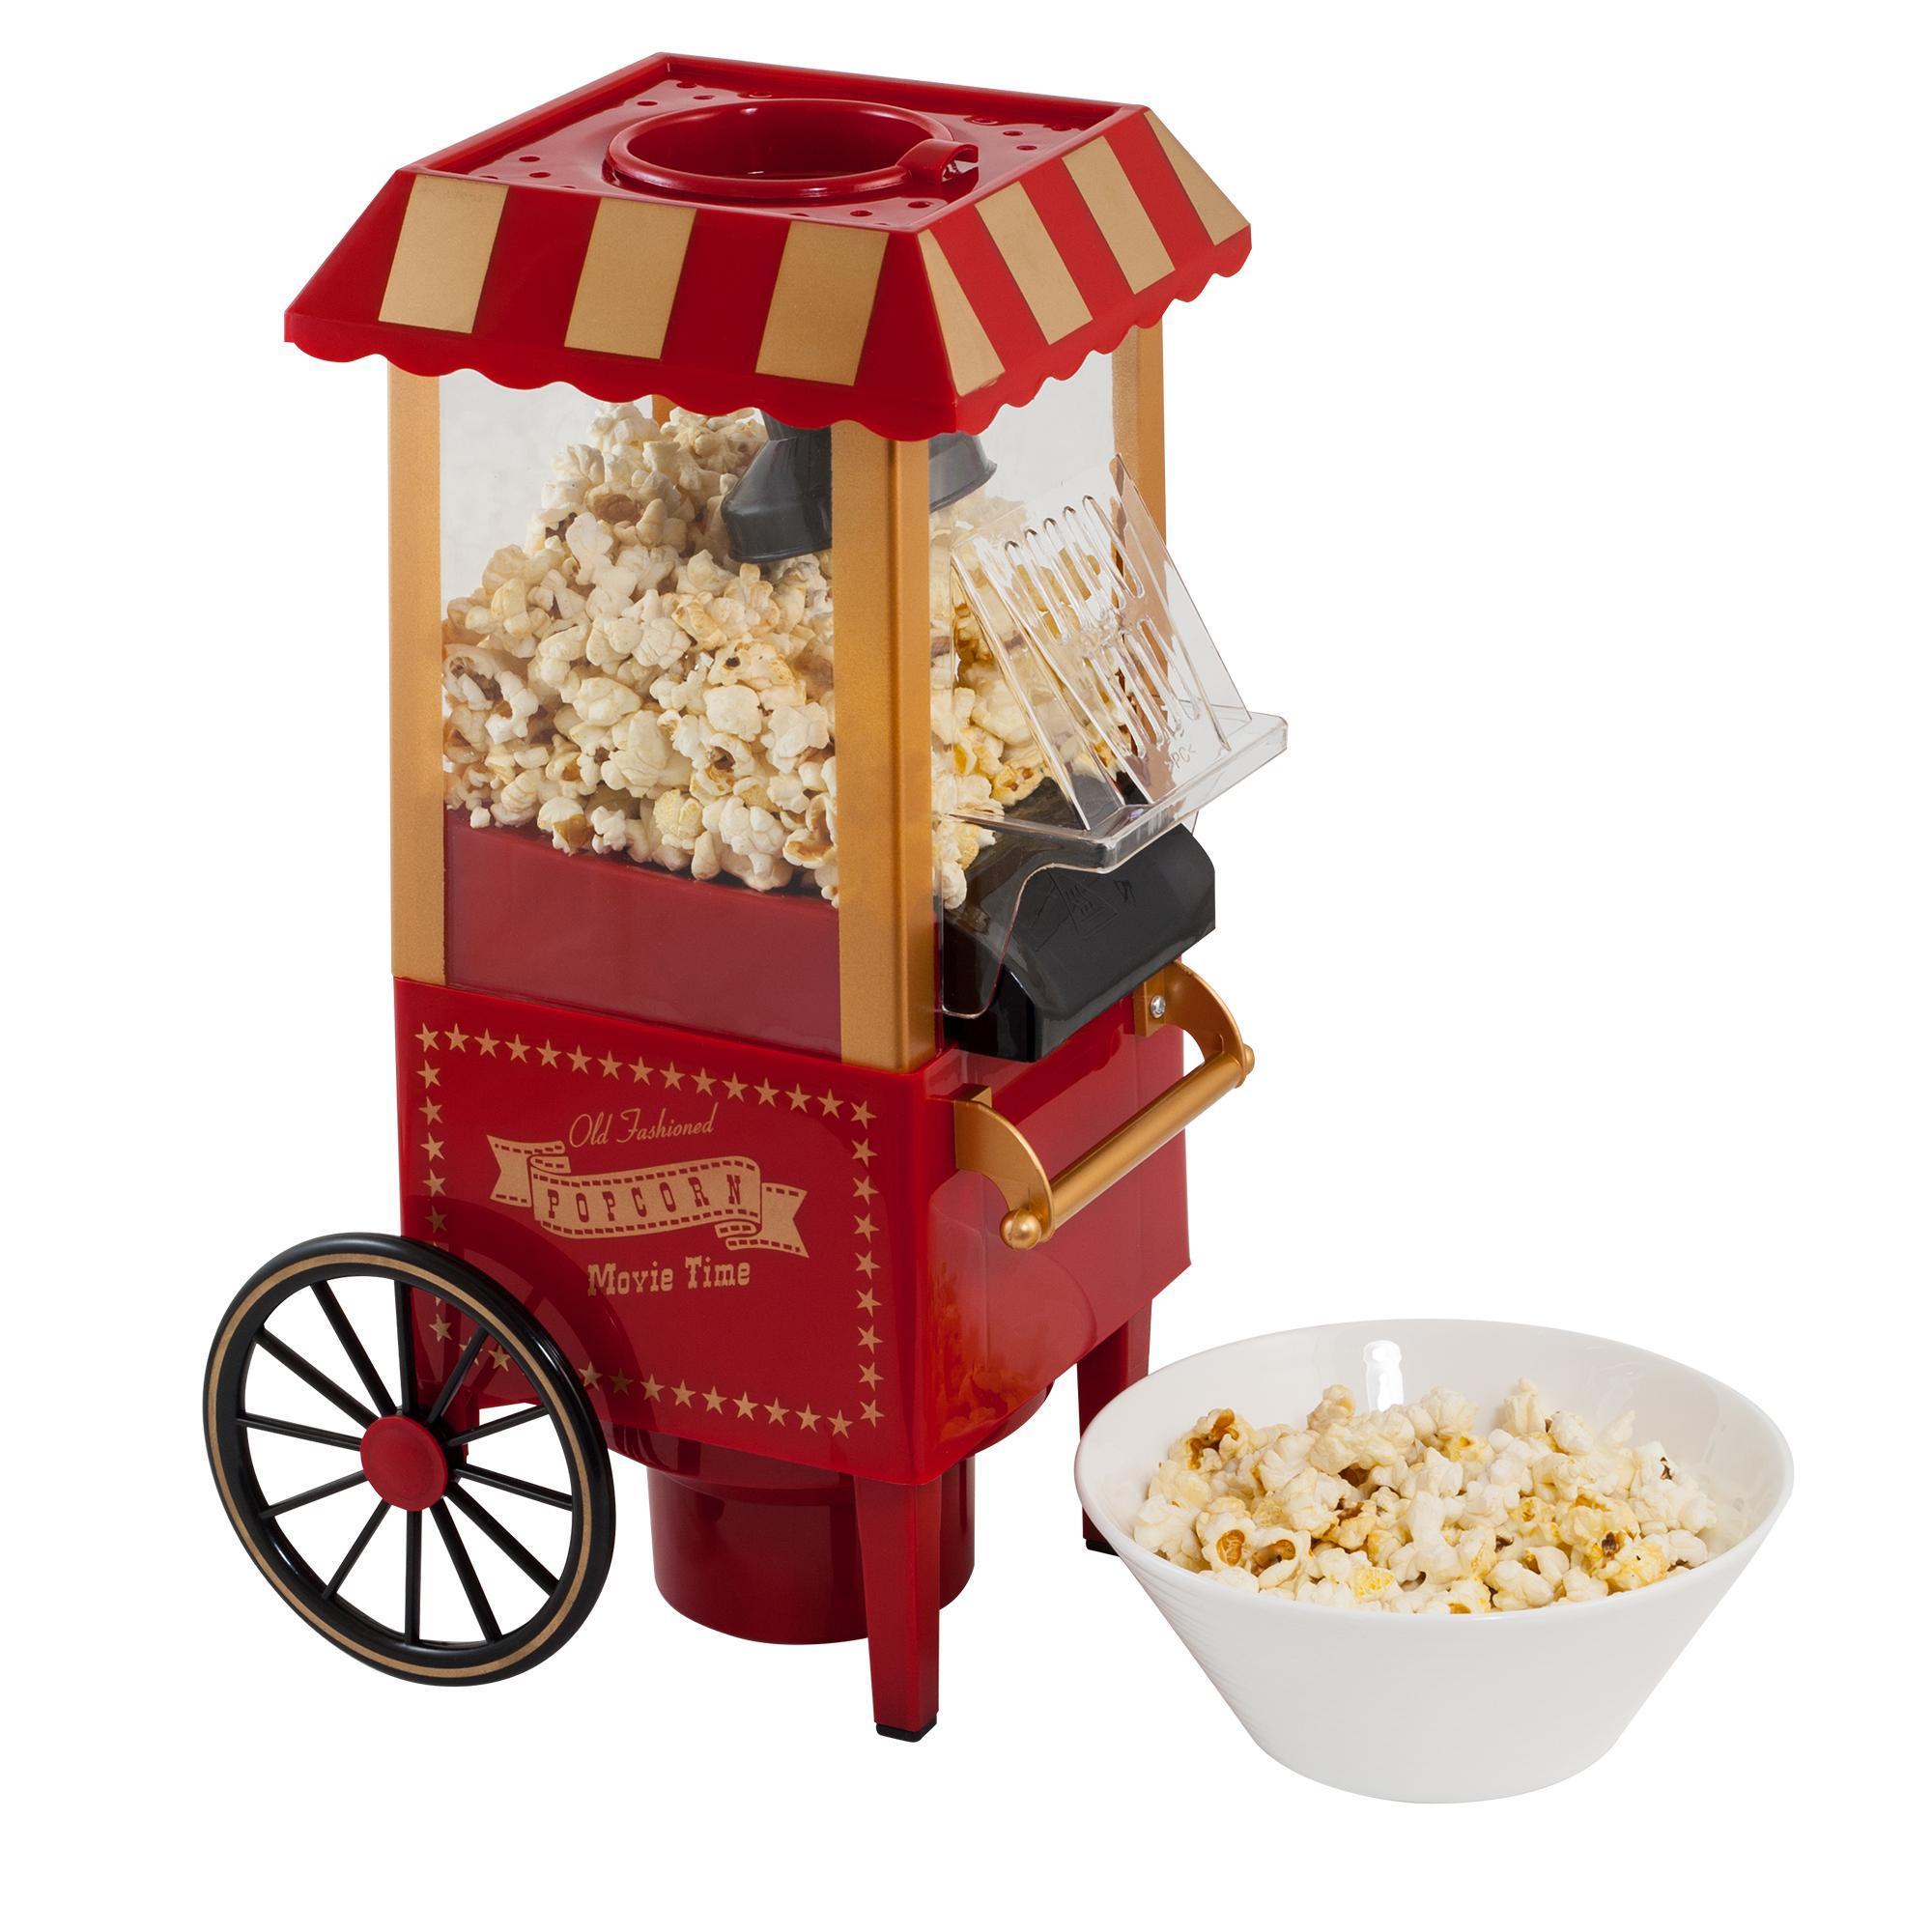 #3 - Retro Popcorn Maskine m/hjul (lav popcorn uden olie)